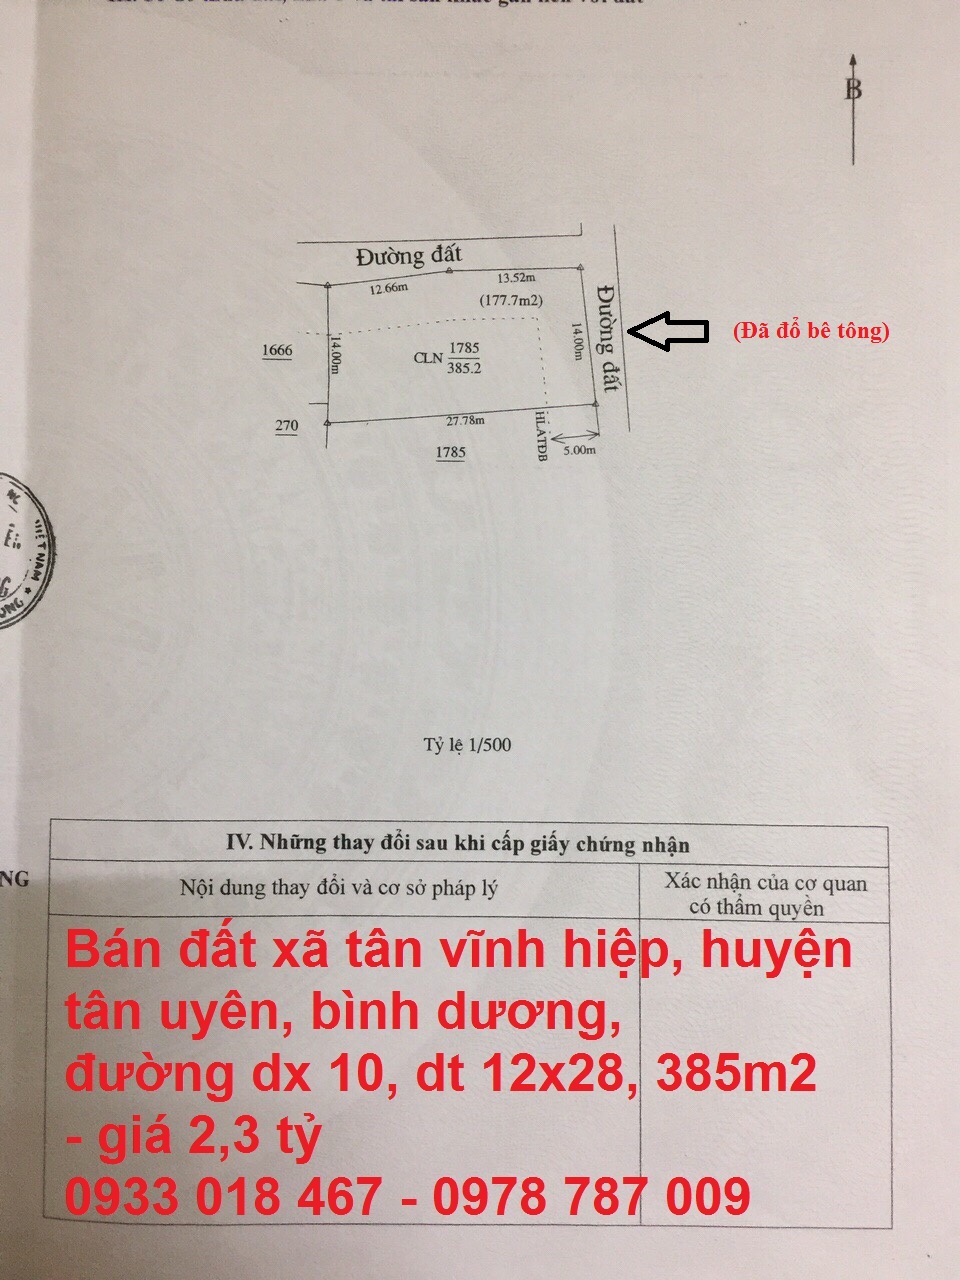 https://cdn.realtorvietnam.com/uploads/real_estate/ban-dat-xa-tan-vinh-hiep-huyen-tan-uyen-binh-duong-duong-dx-10-dt-12x28-385m2-0933-0184674_1520512081.jpg